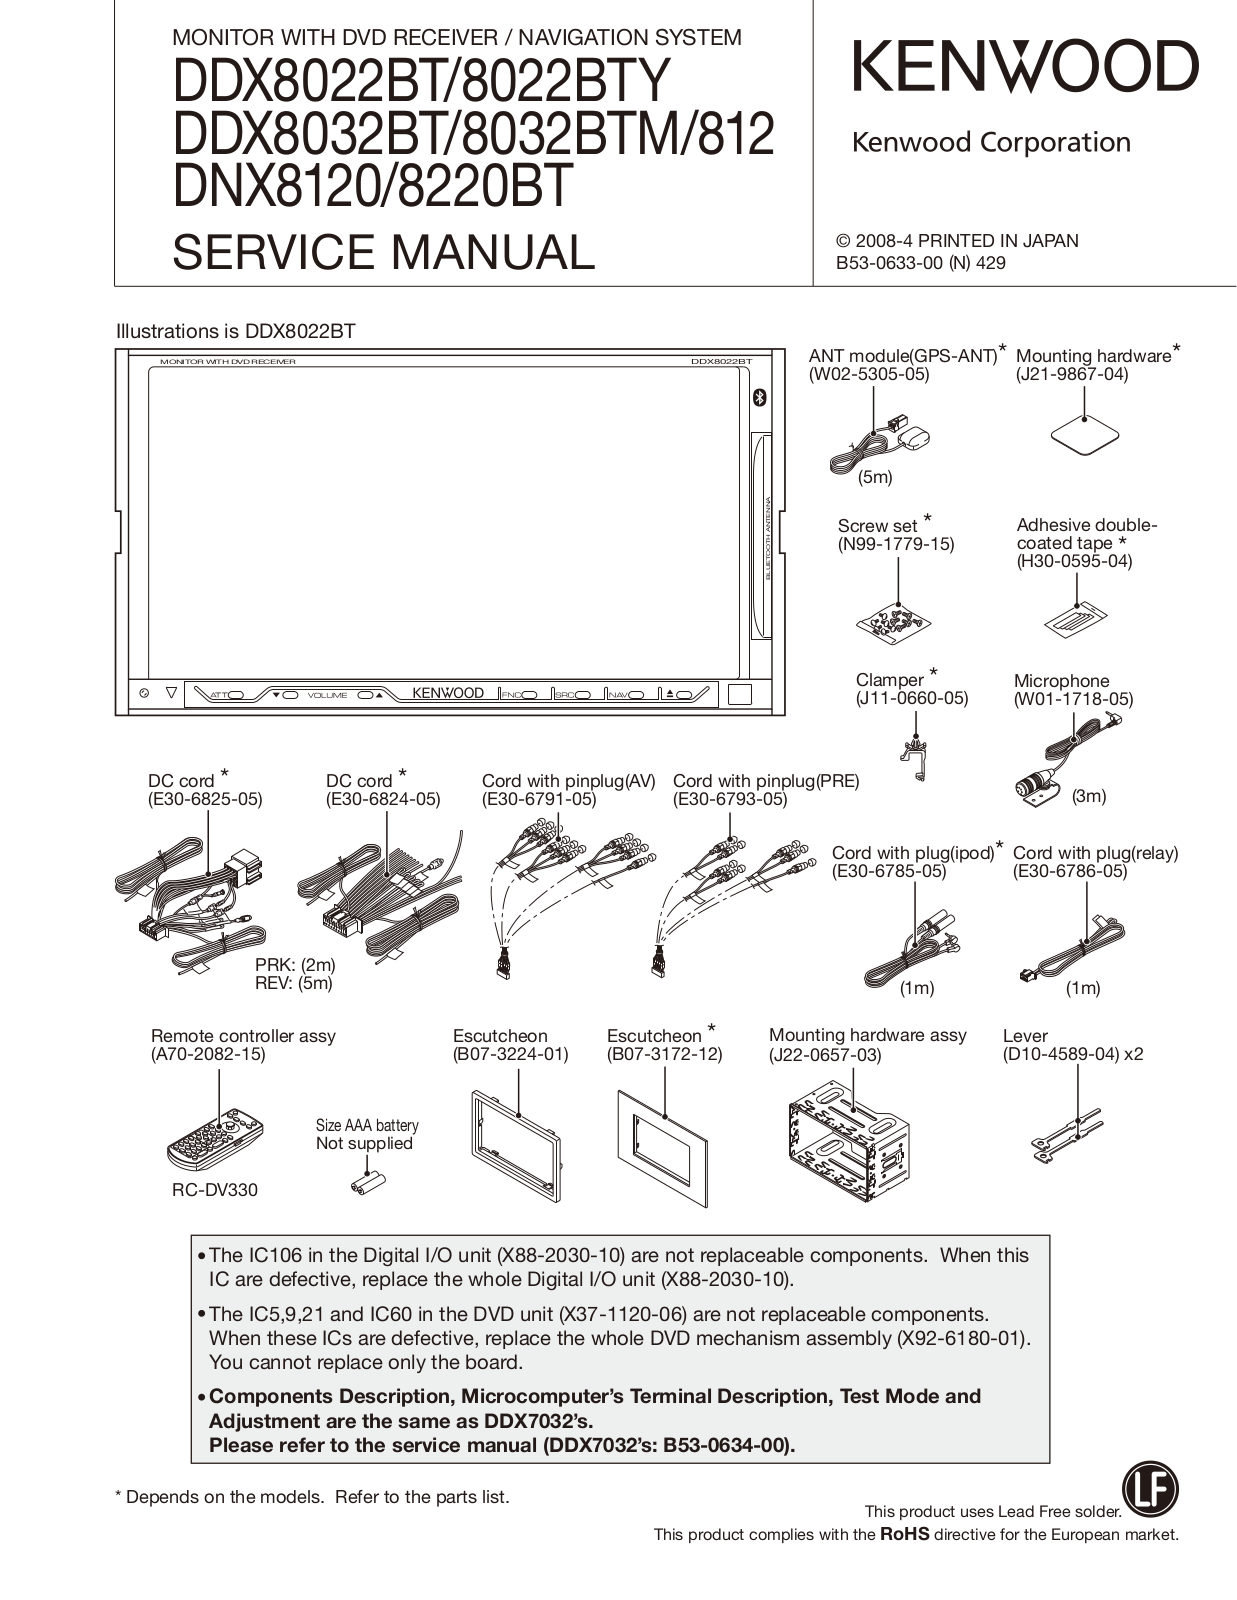 Kenwood DNX-8220-BT Service Manual